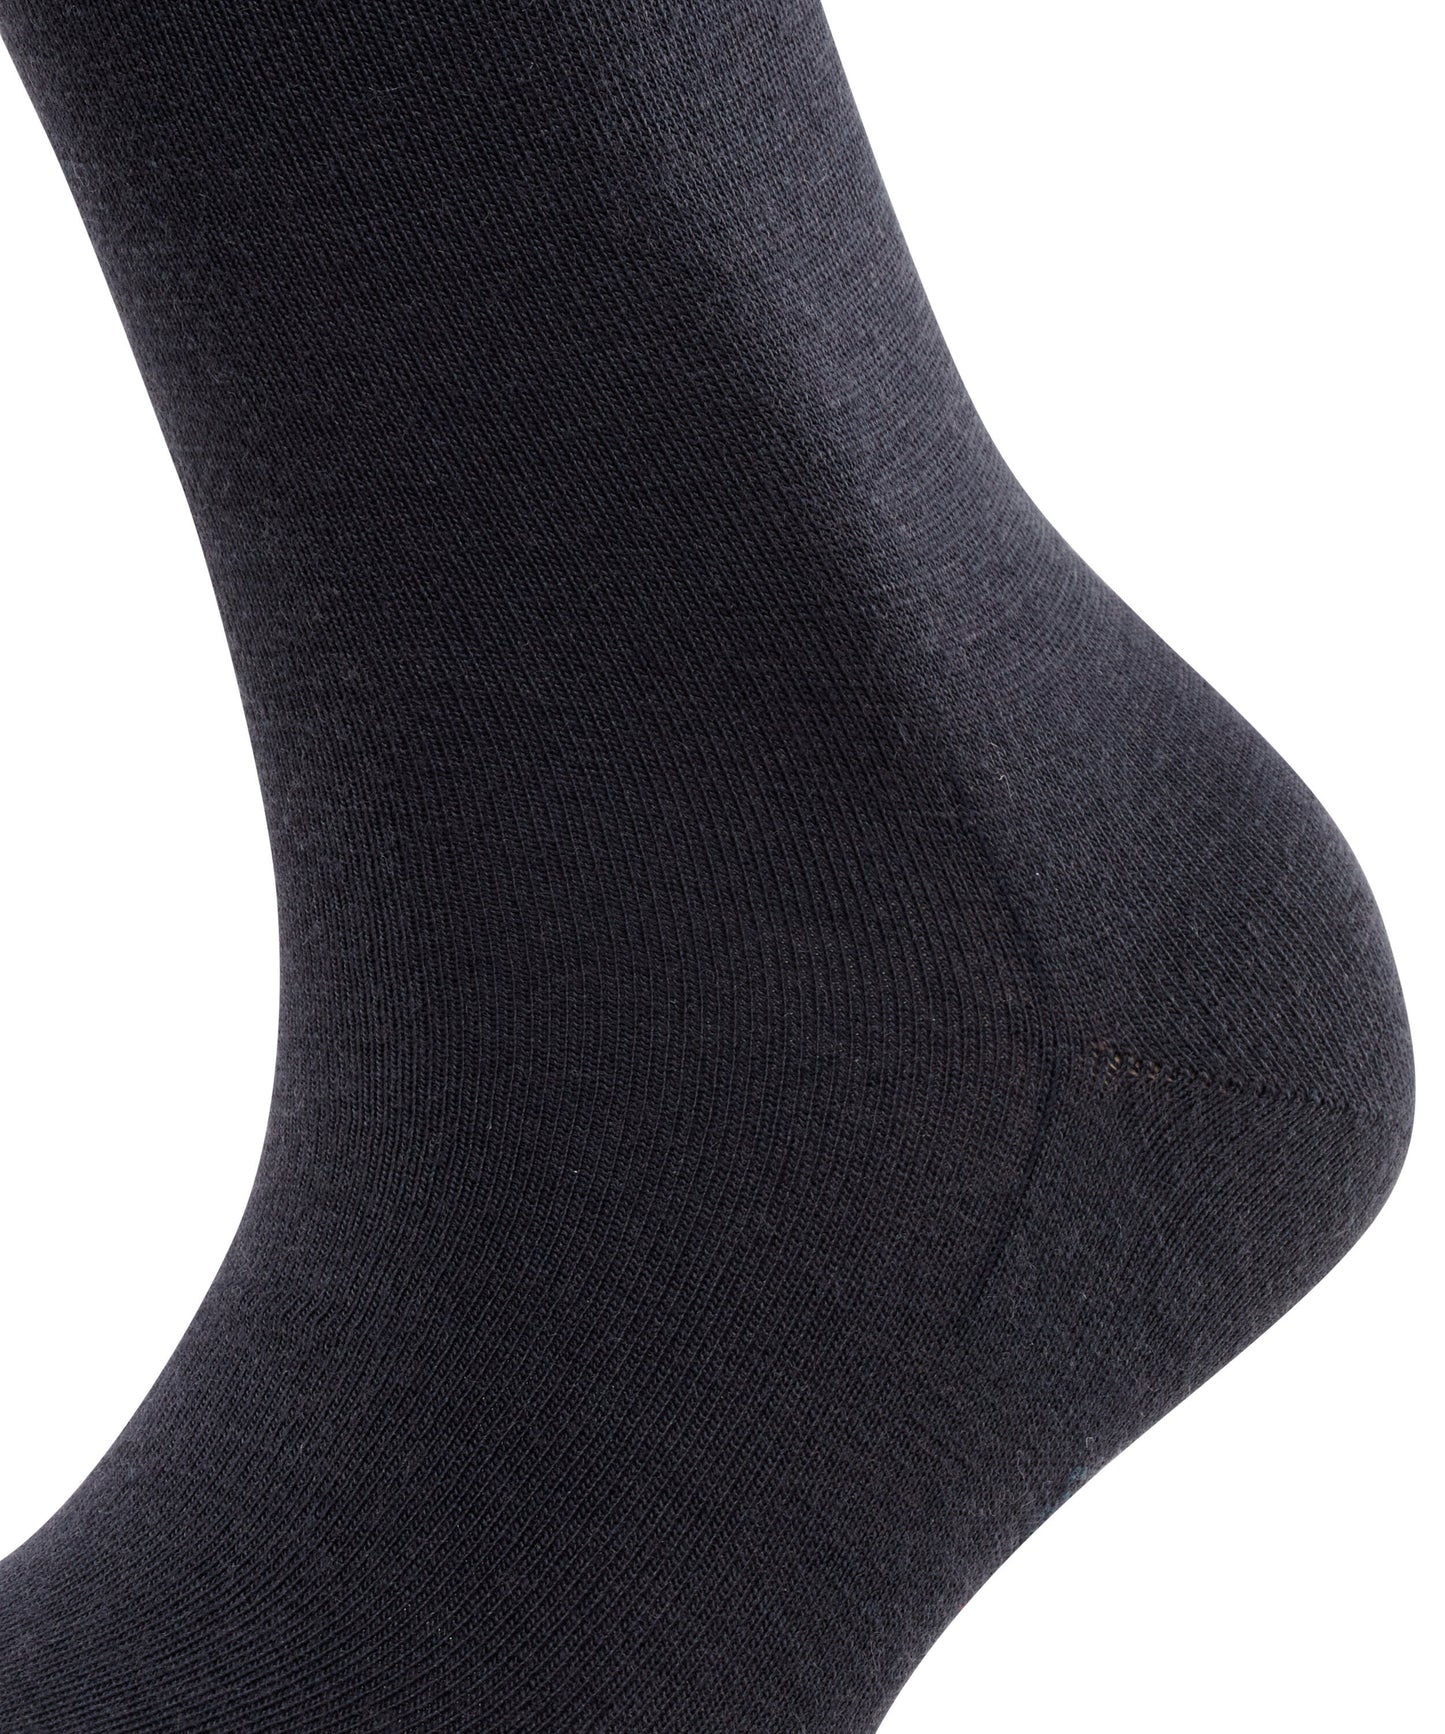 Socken Softmerino (Dark Navy)